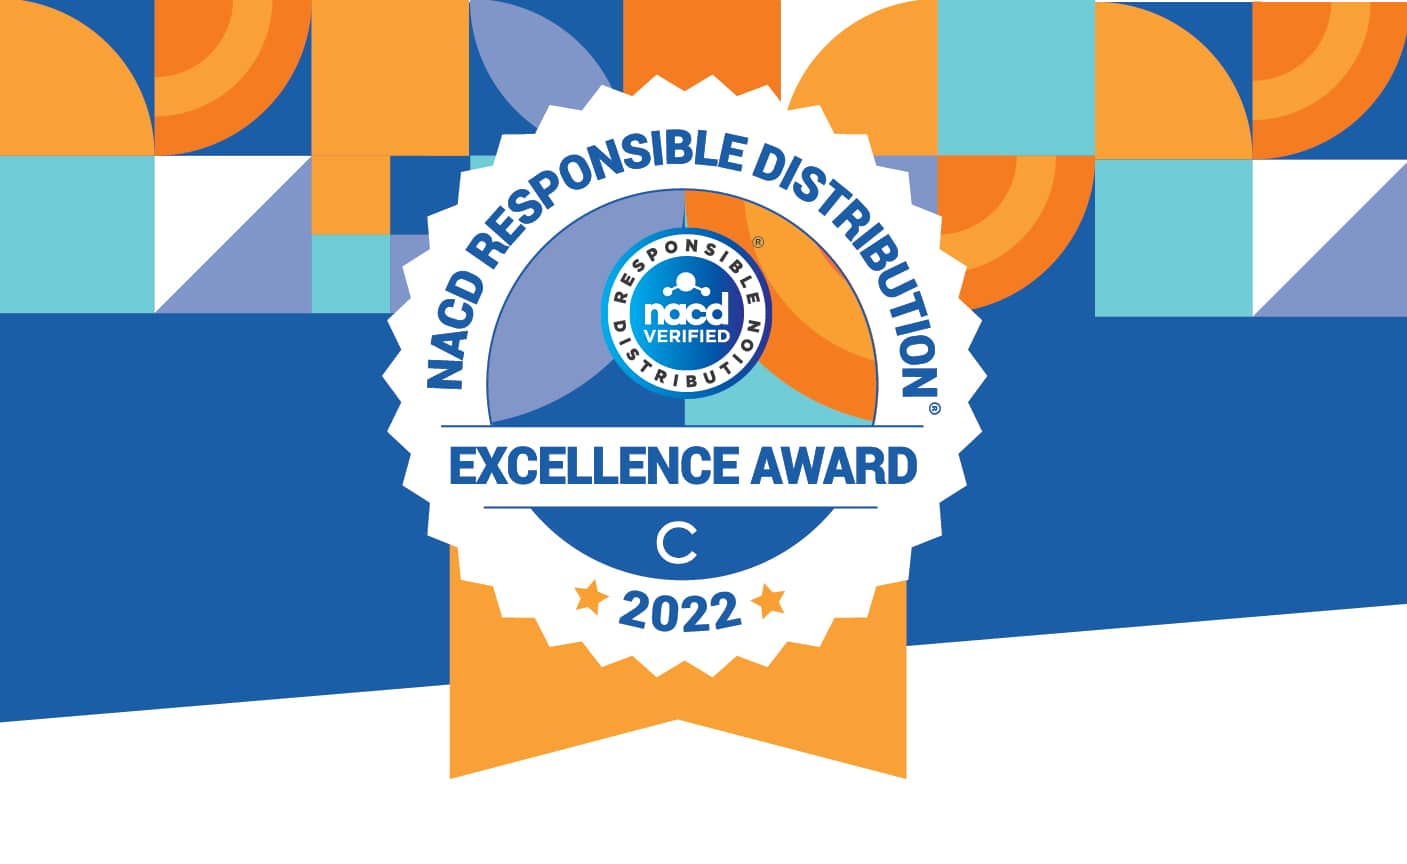 NACD Responsible Distribution Excellence Award 2022, NACD Verified